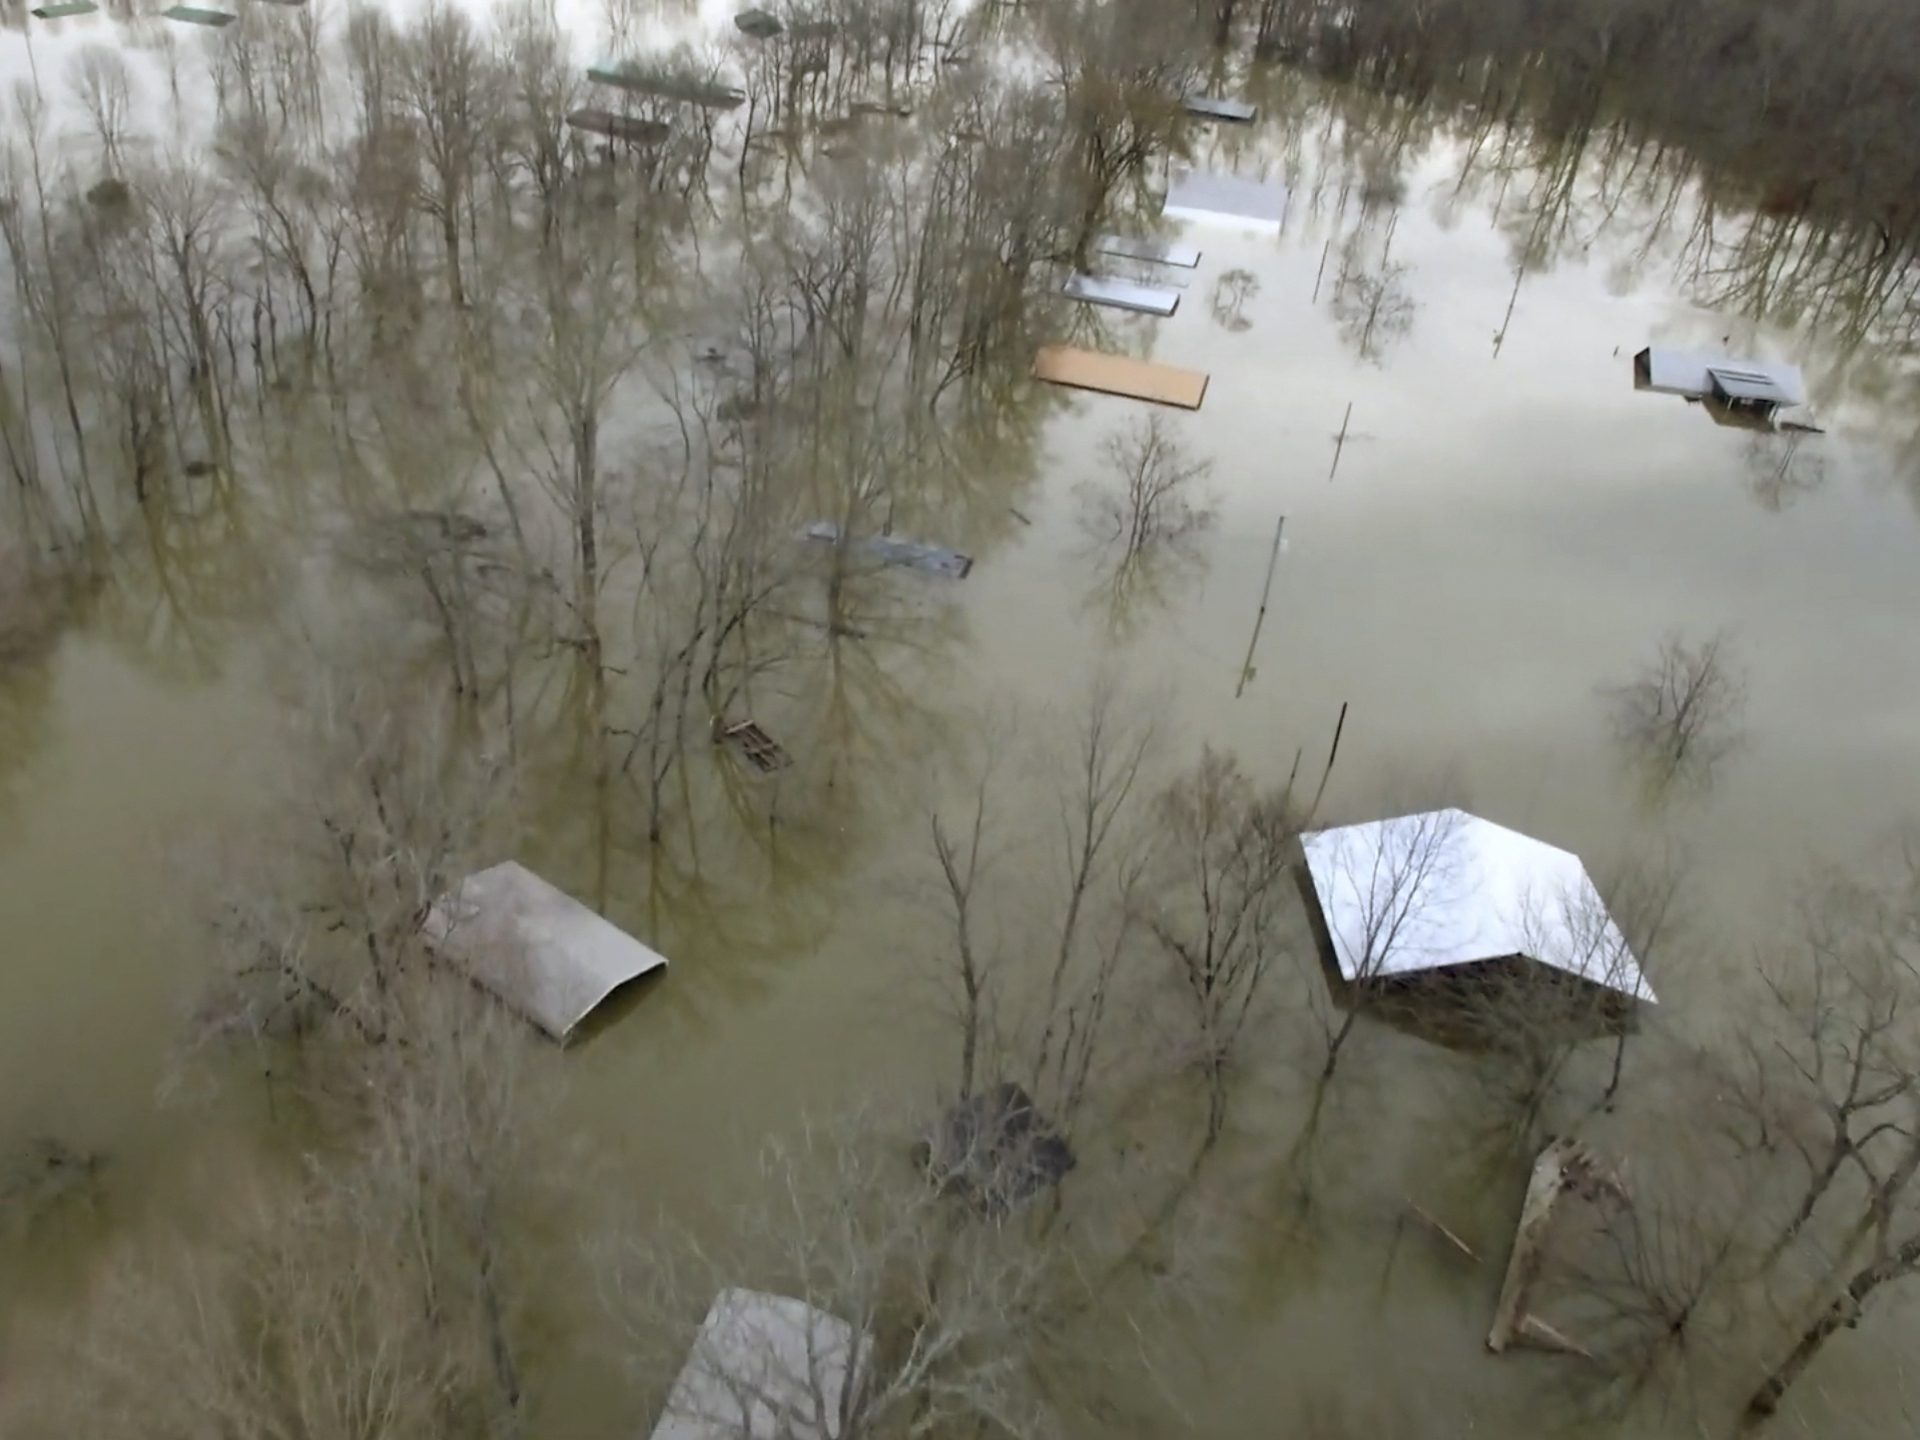 Buildings were underwater on Saturday in Savannah, Tenn., after days of heavy rain in the area.